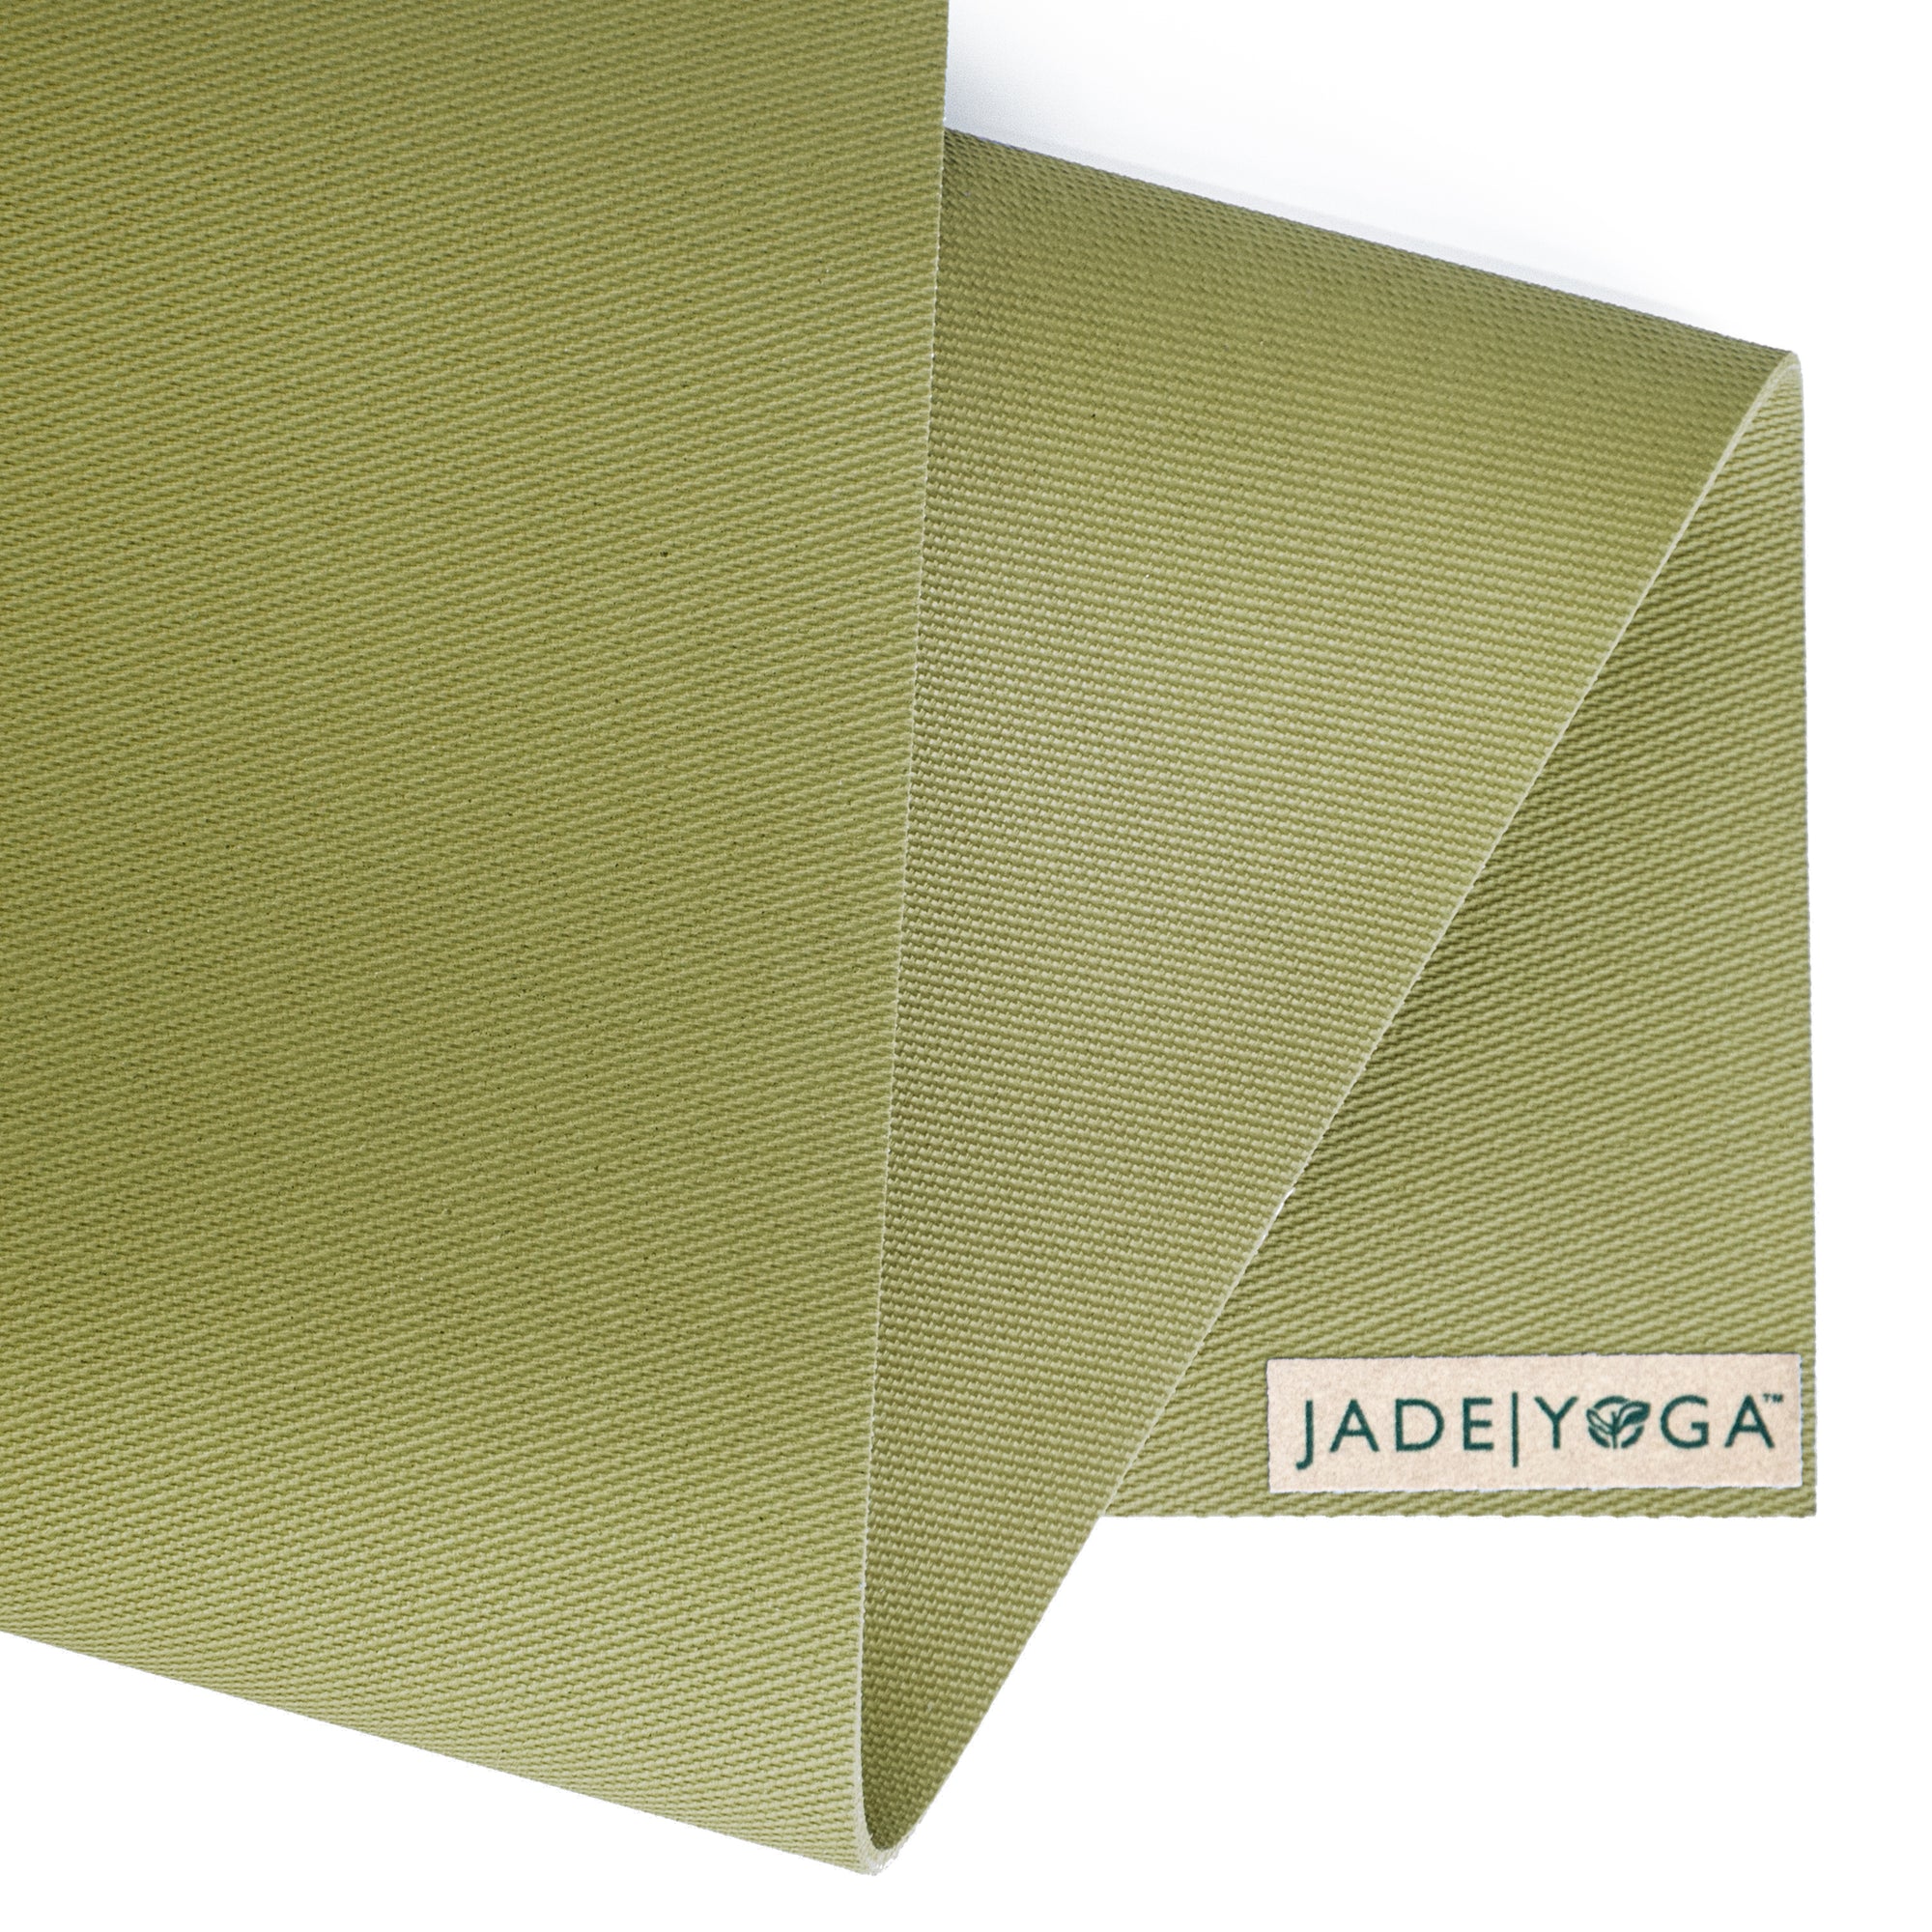 Jade Yoga Harmony Mat 68” Length Reviews